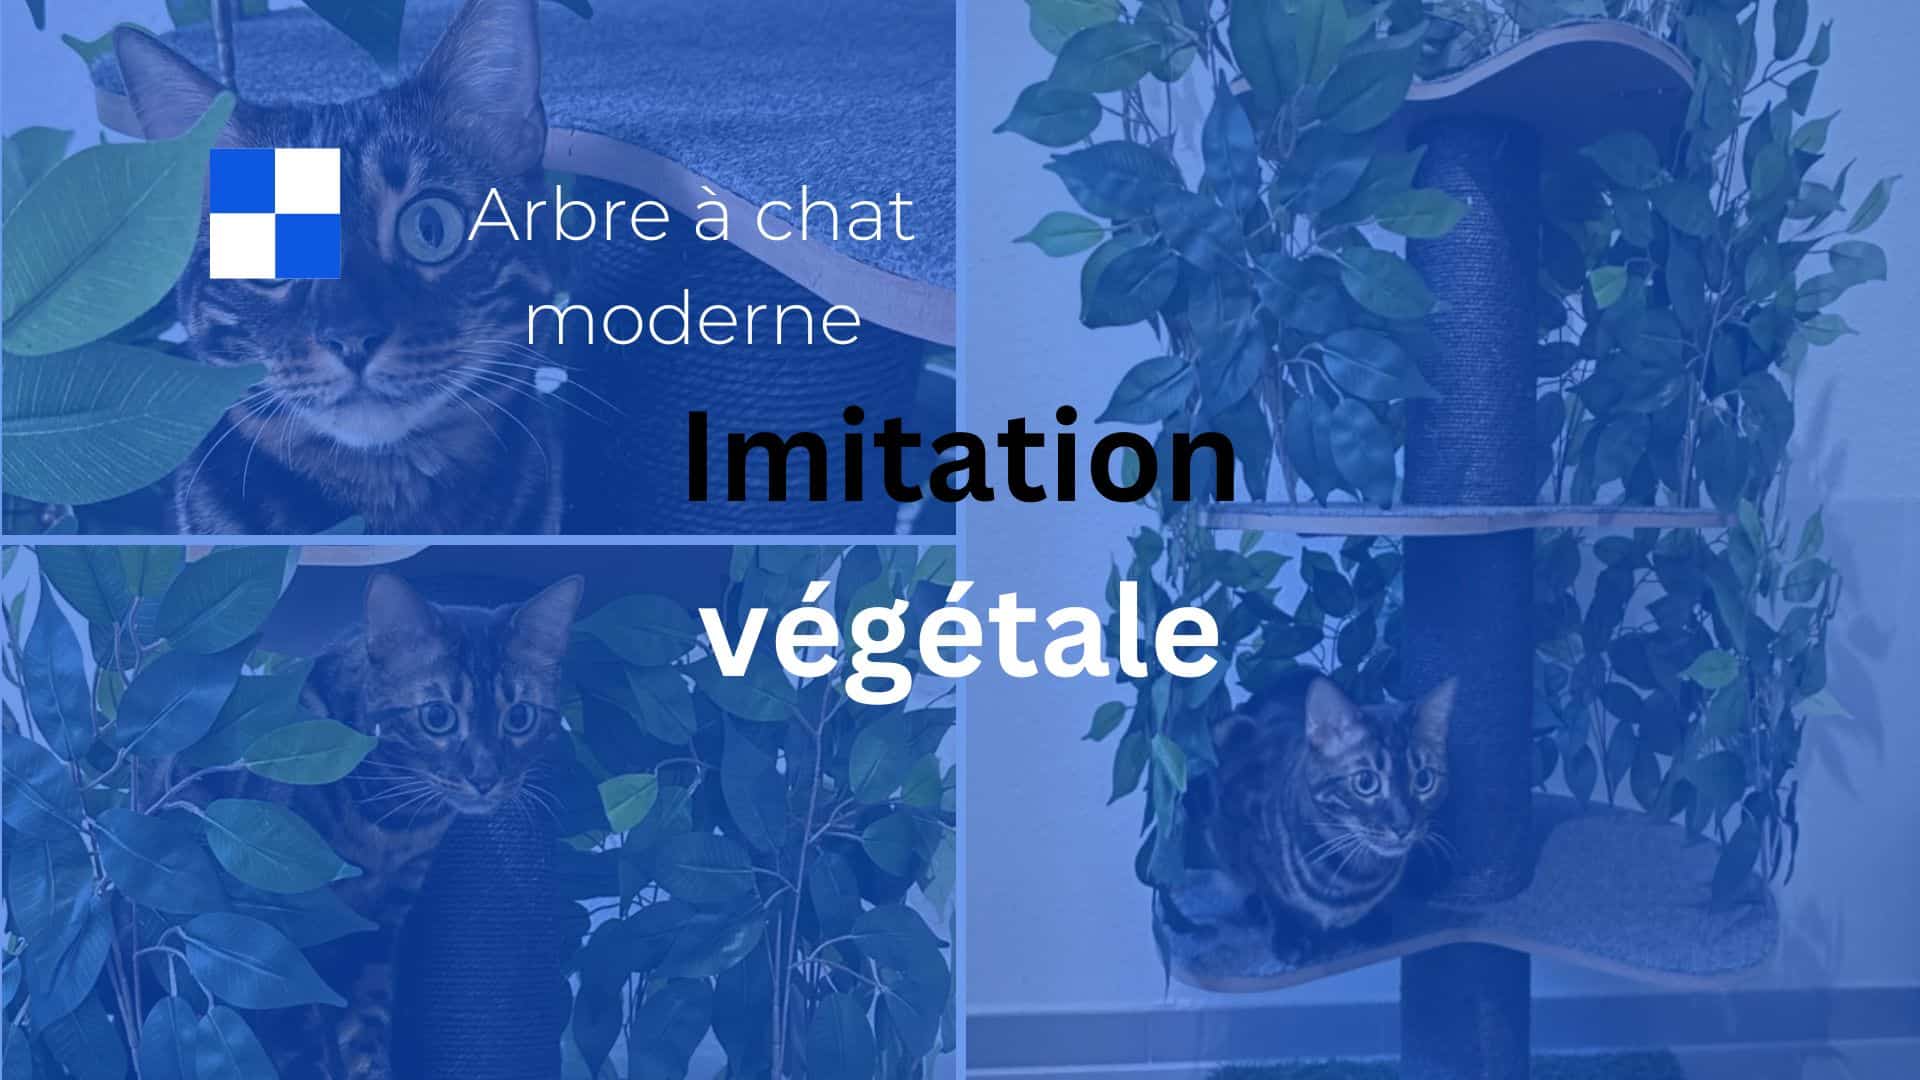 arbre a chat moderne imitation vegetale